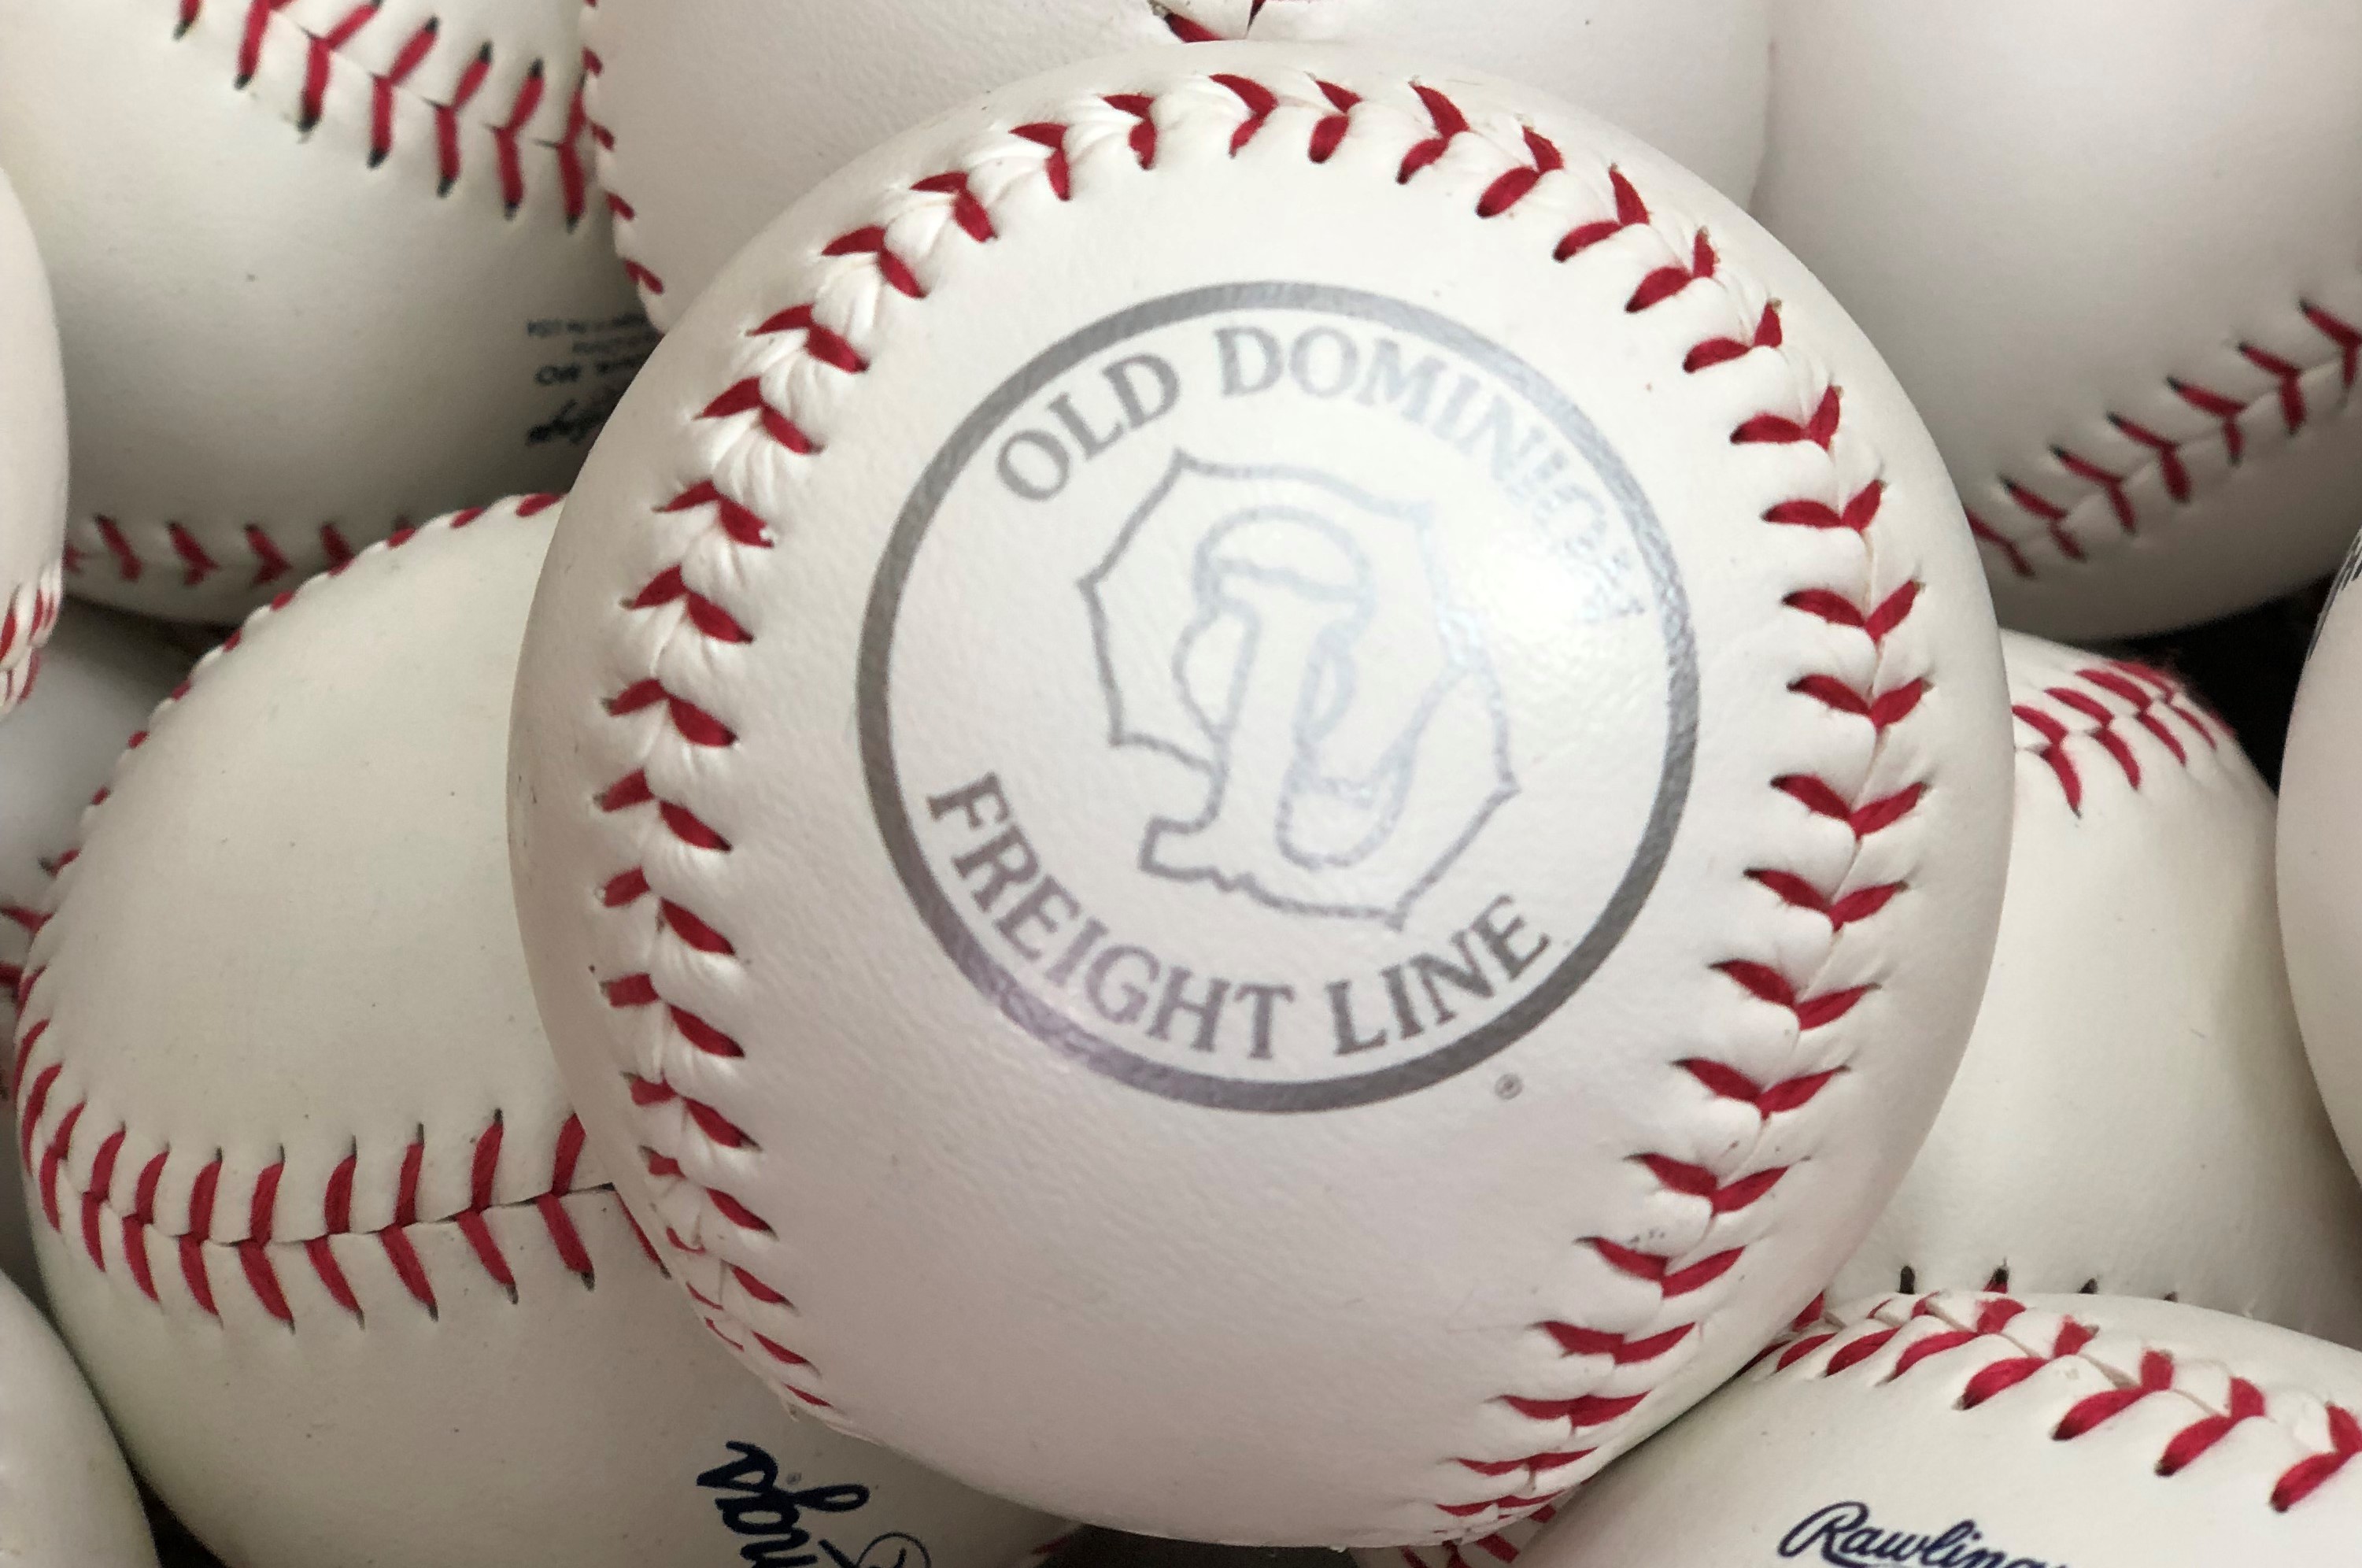 Old Dominion Freight Line Donates 12,000 Baseballs